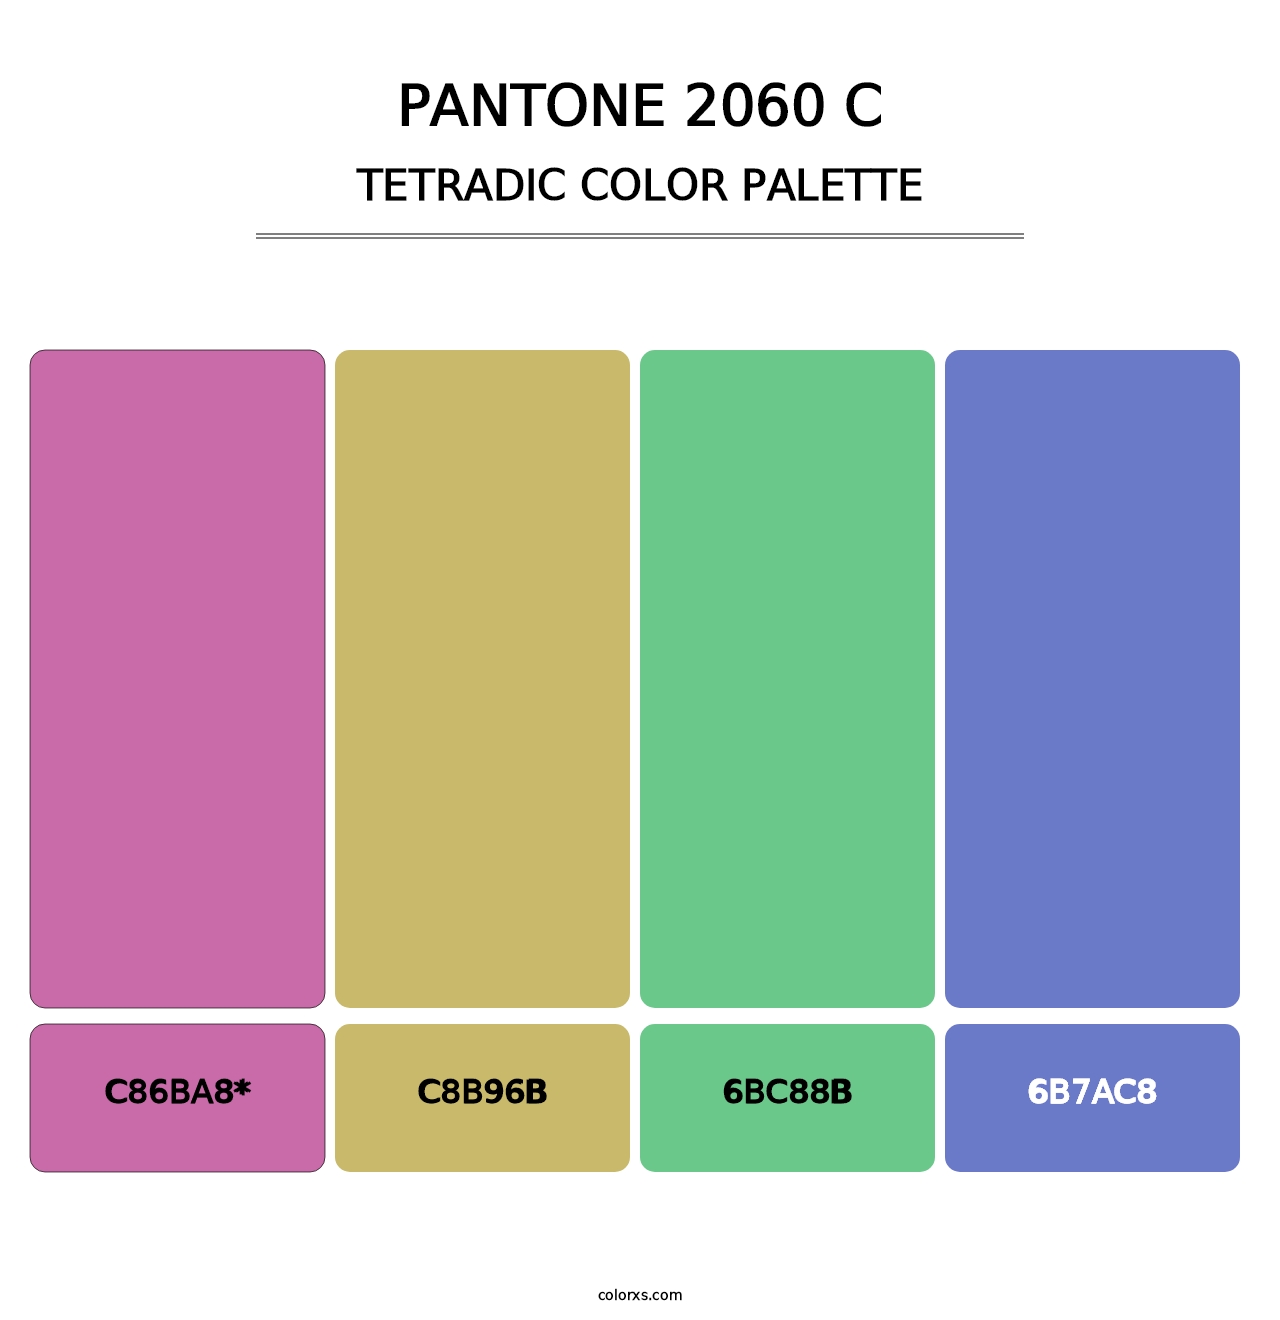 PANTONE 2060 C - Tetradic Color Palette